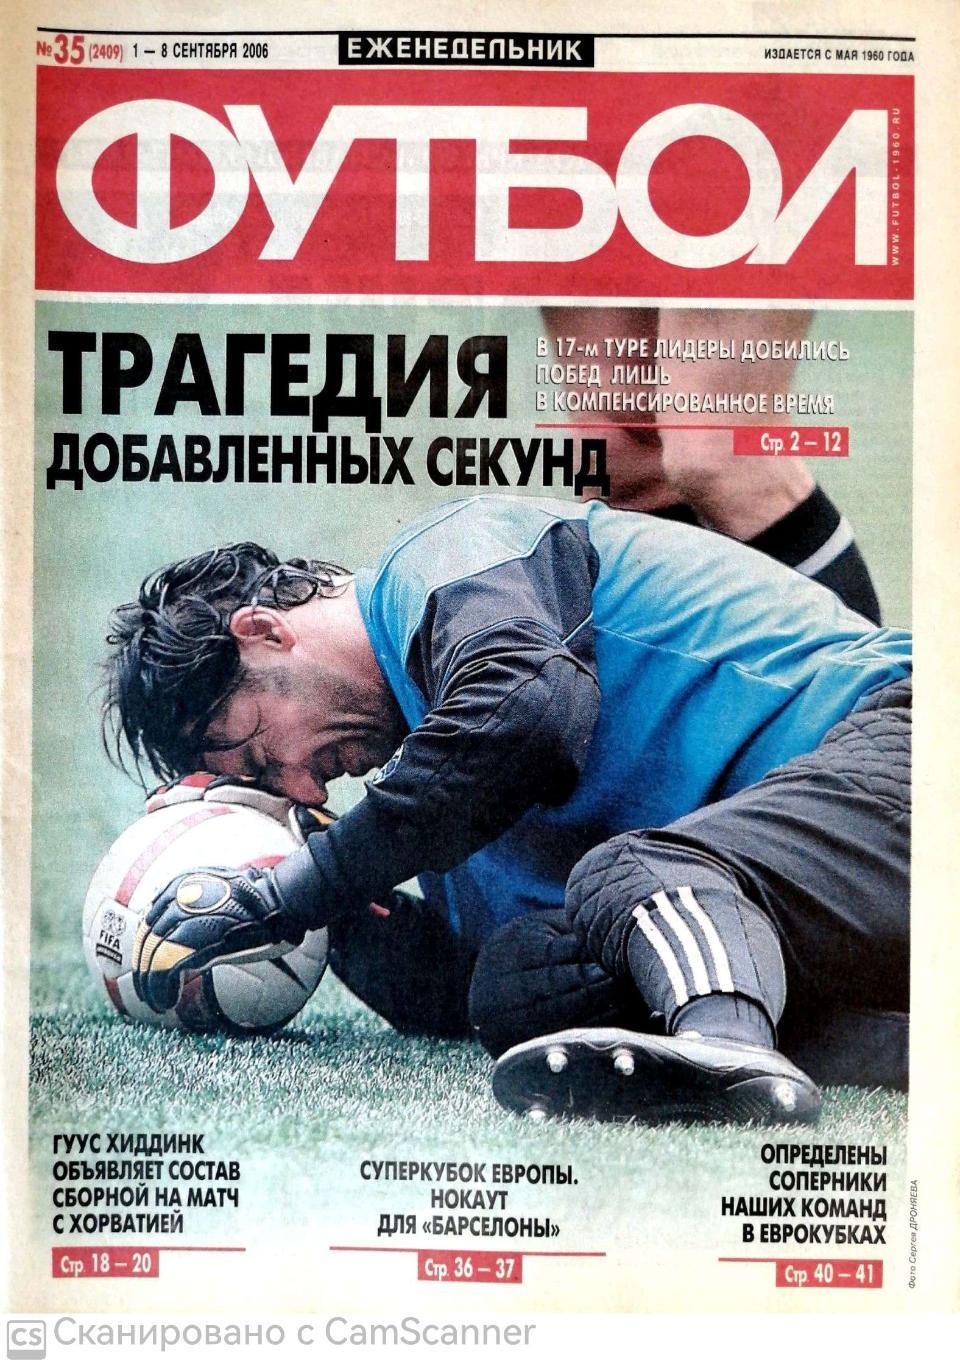 Еженедельник «Футбол» (Москва). 2006 год. №35